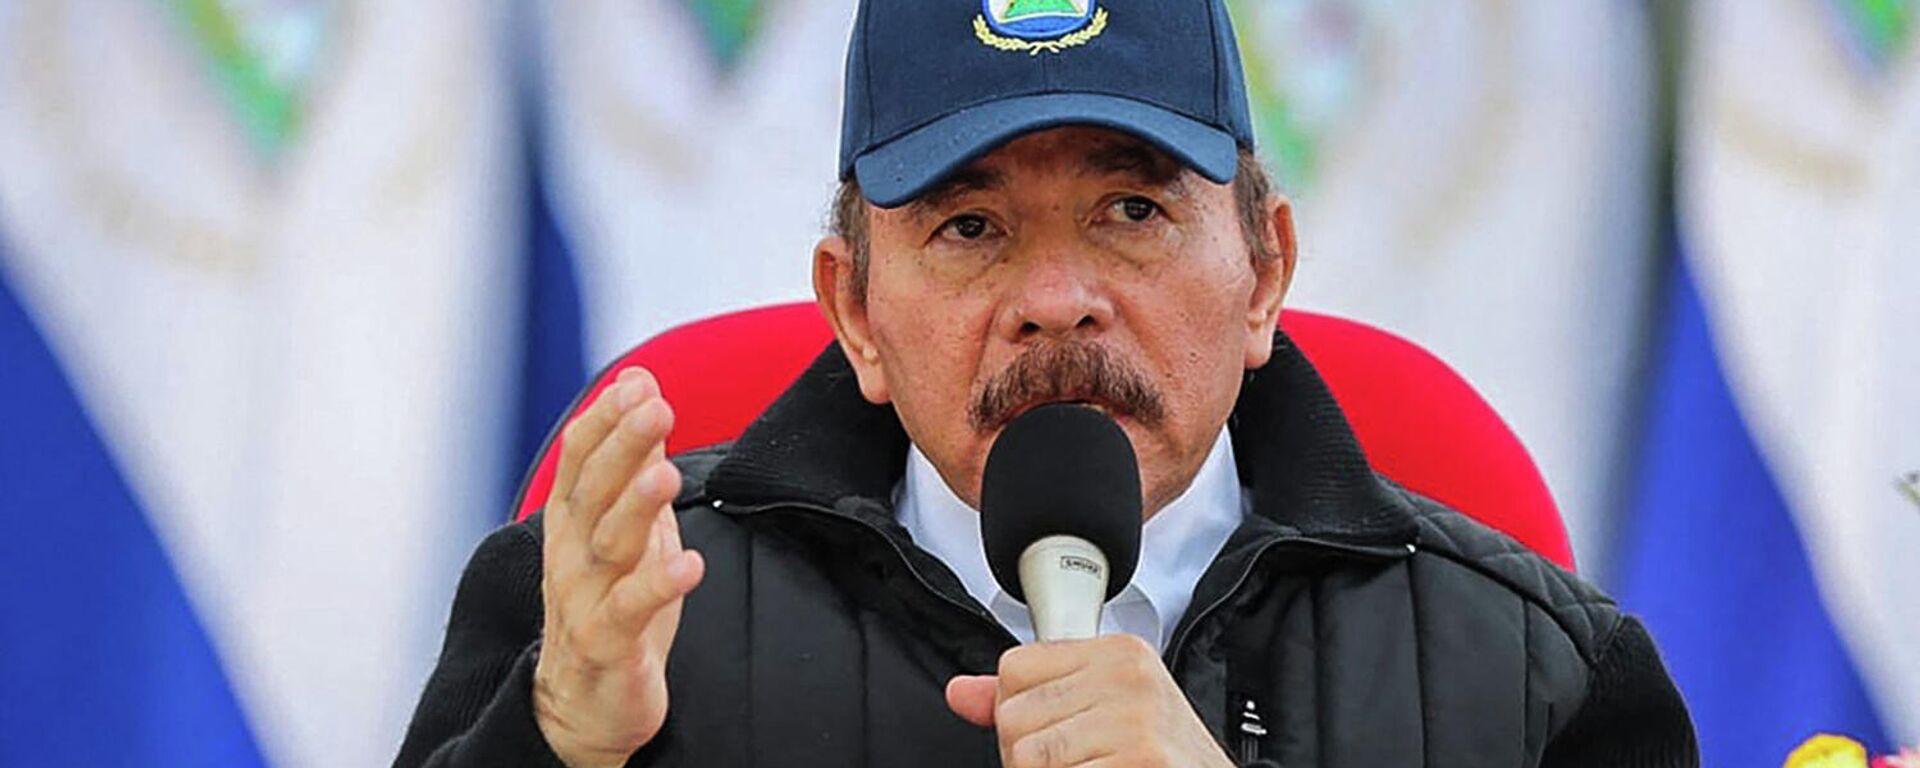 Daniel Ortega, presidente de Nicaragua - Sputnik Mundo, 1920, 12.10.2021